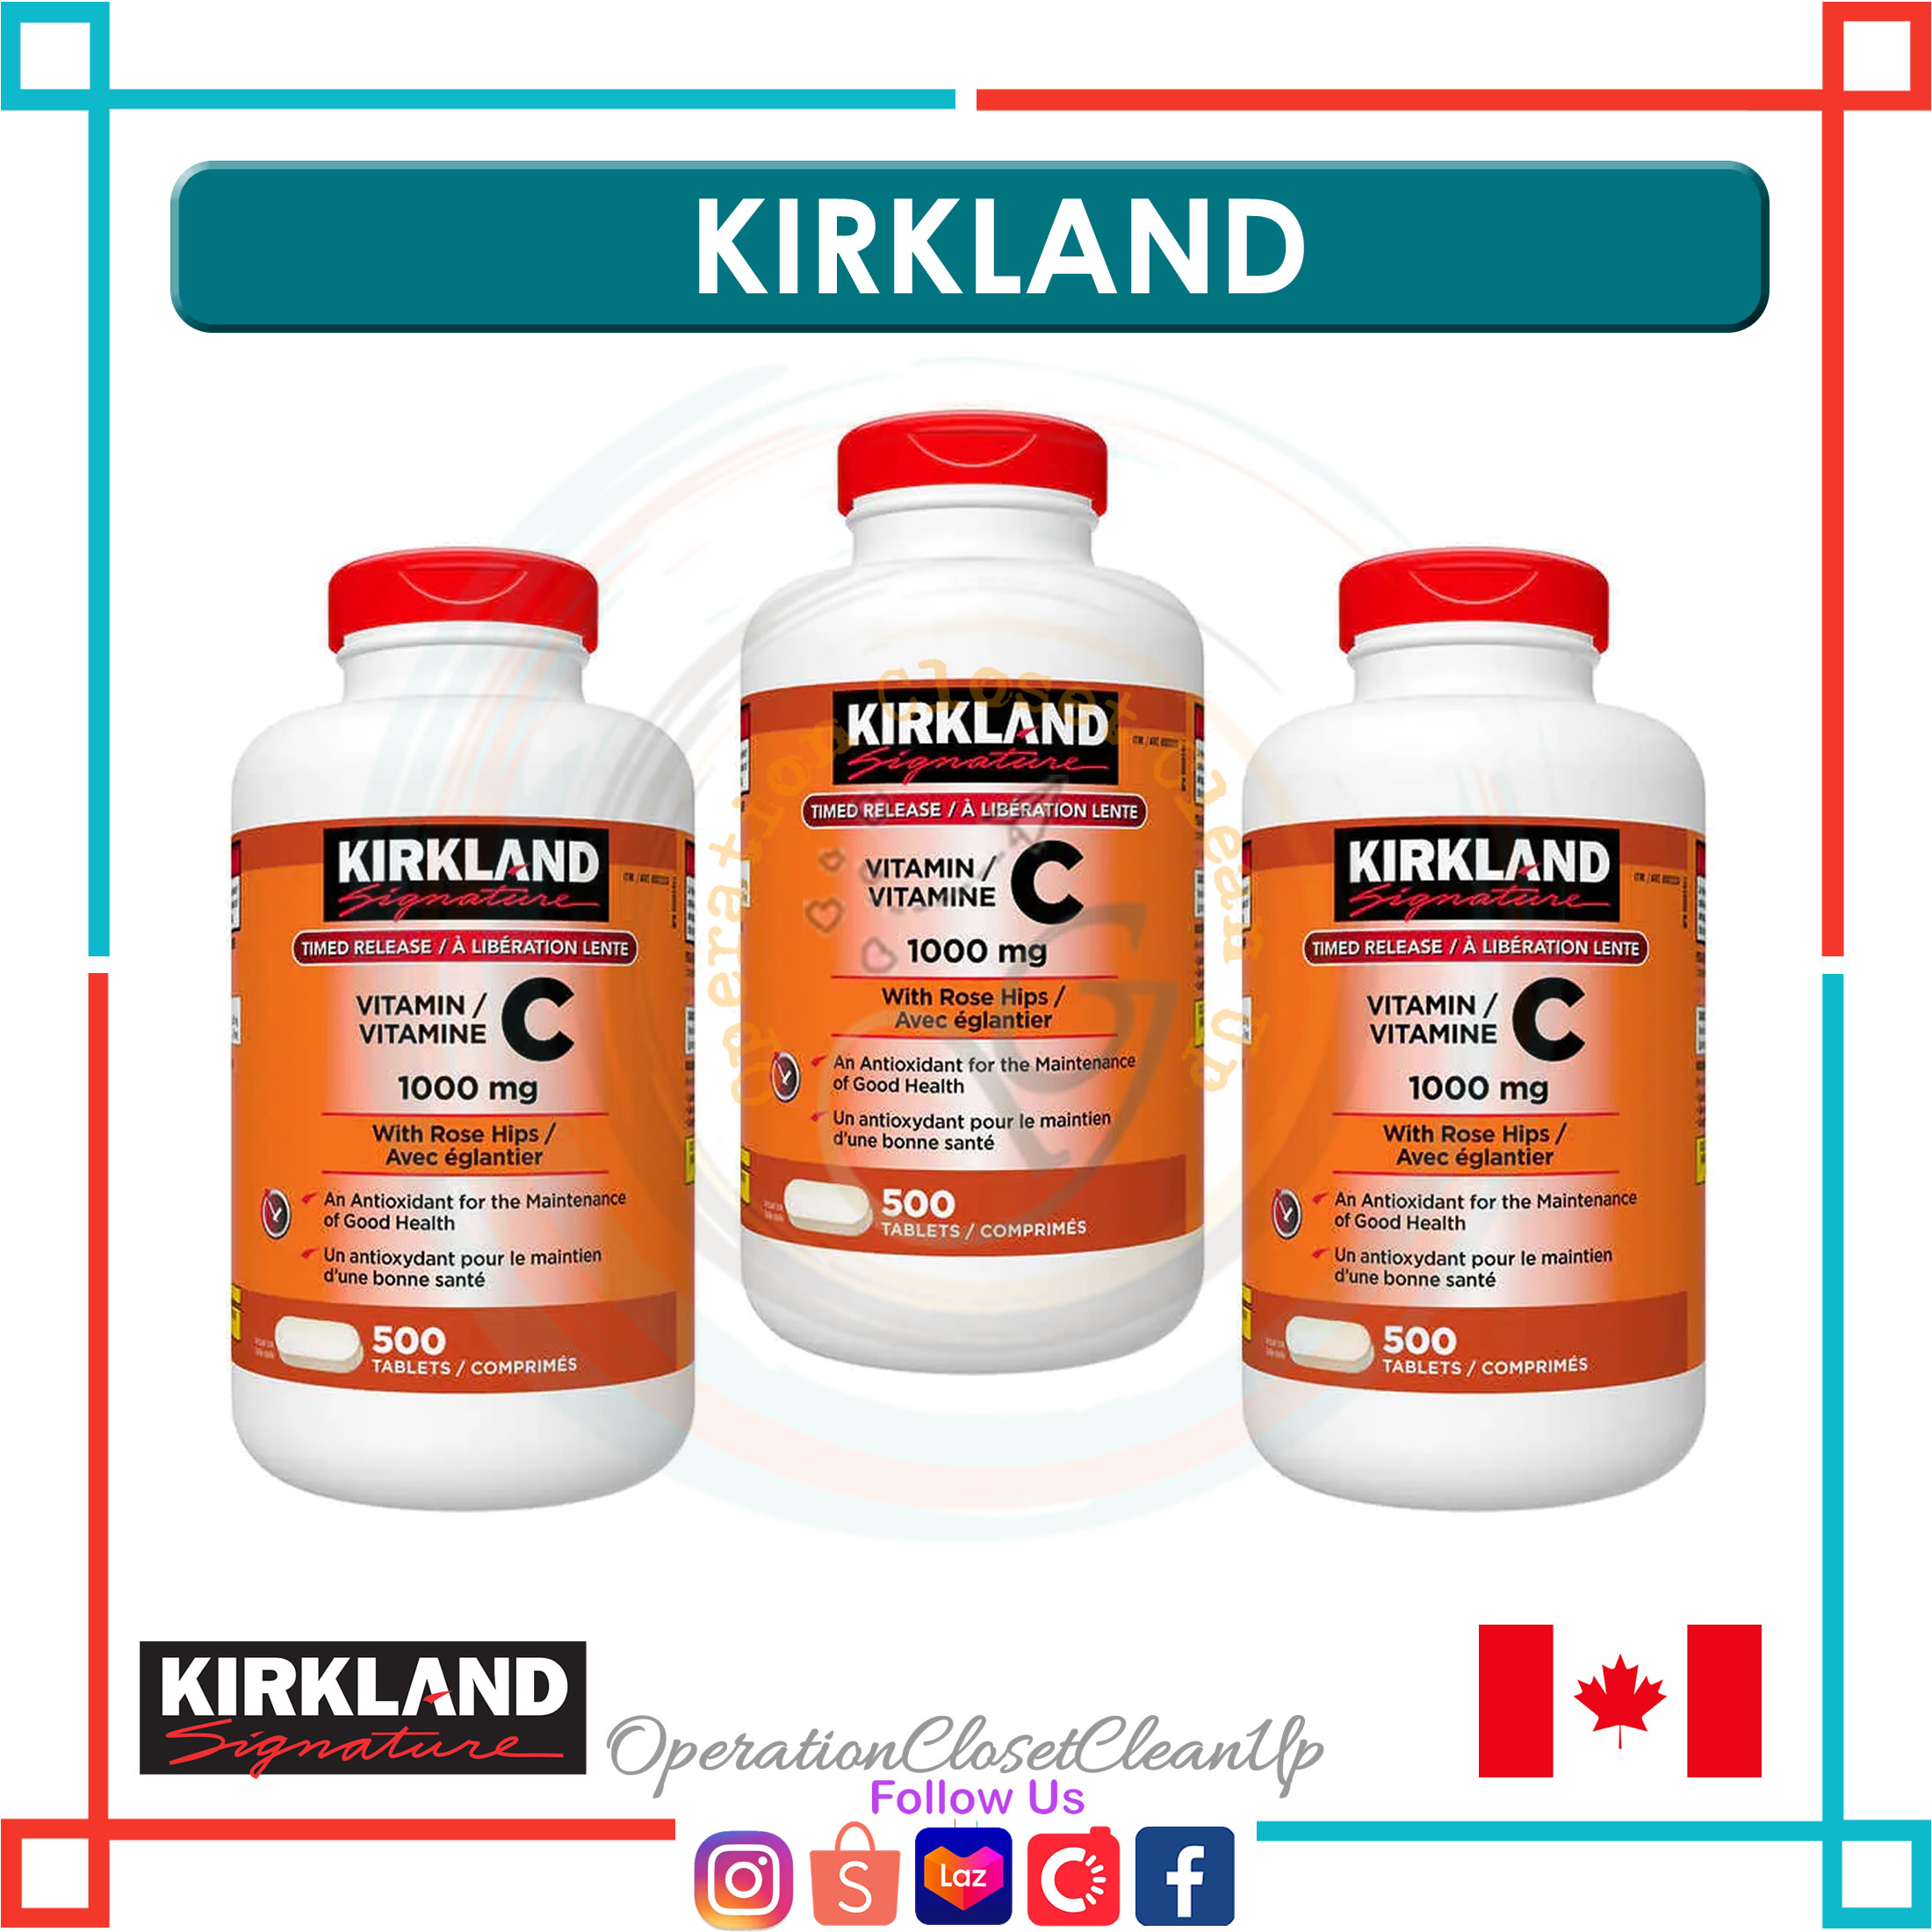 Kirkland Signature Timed Release Vitamin C 1000 mg - 500 Tablets